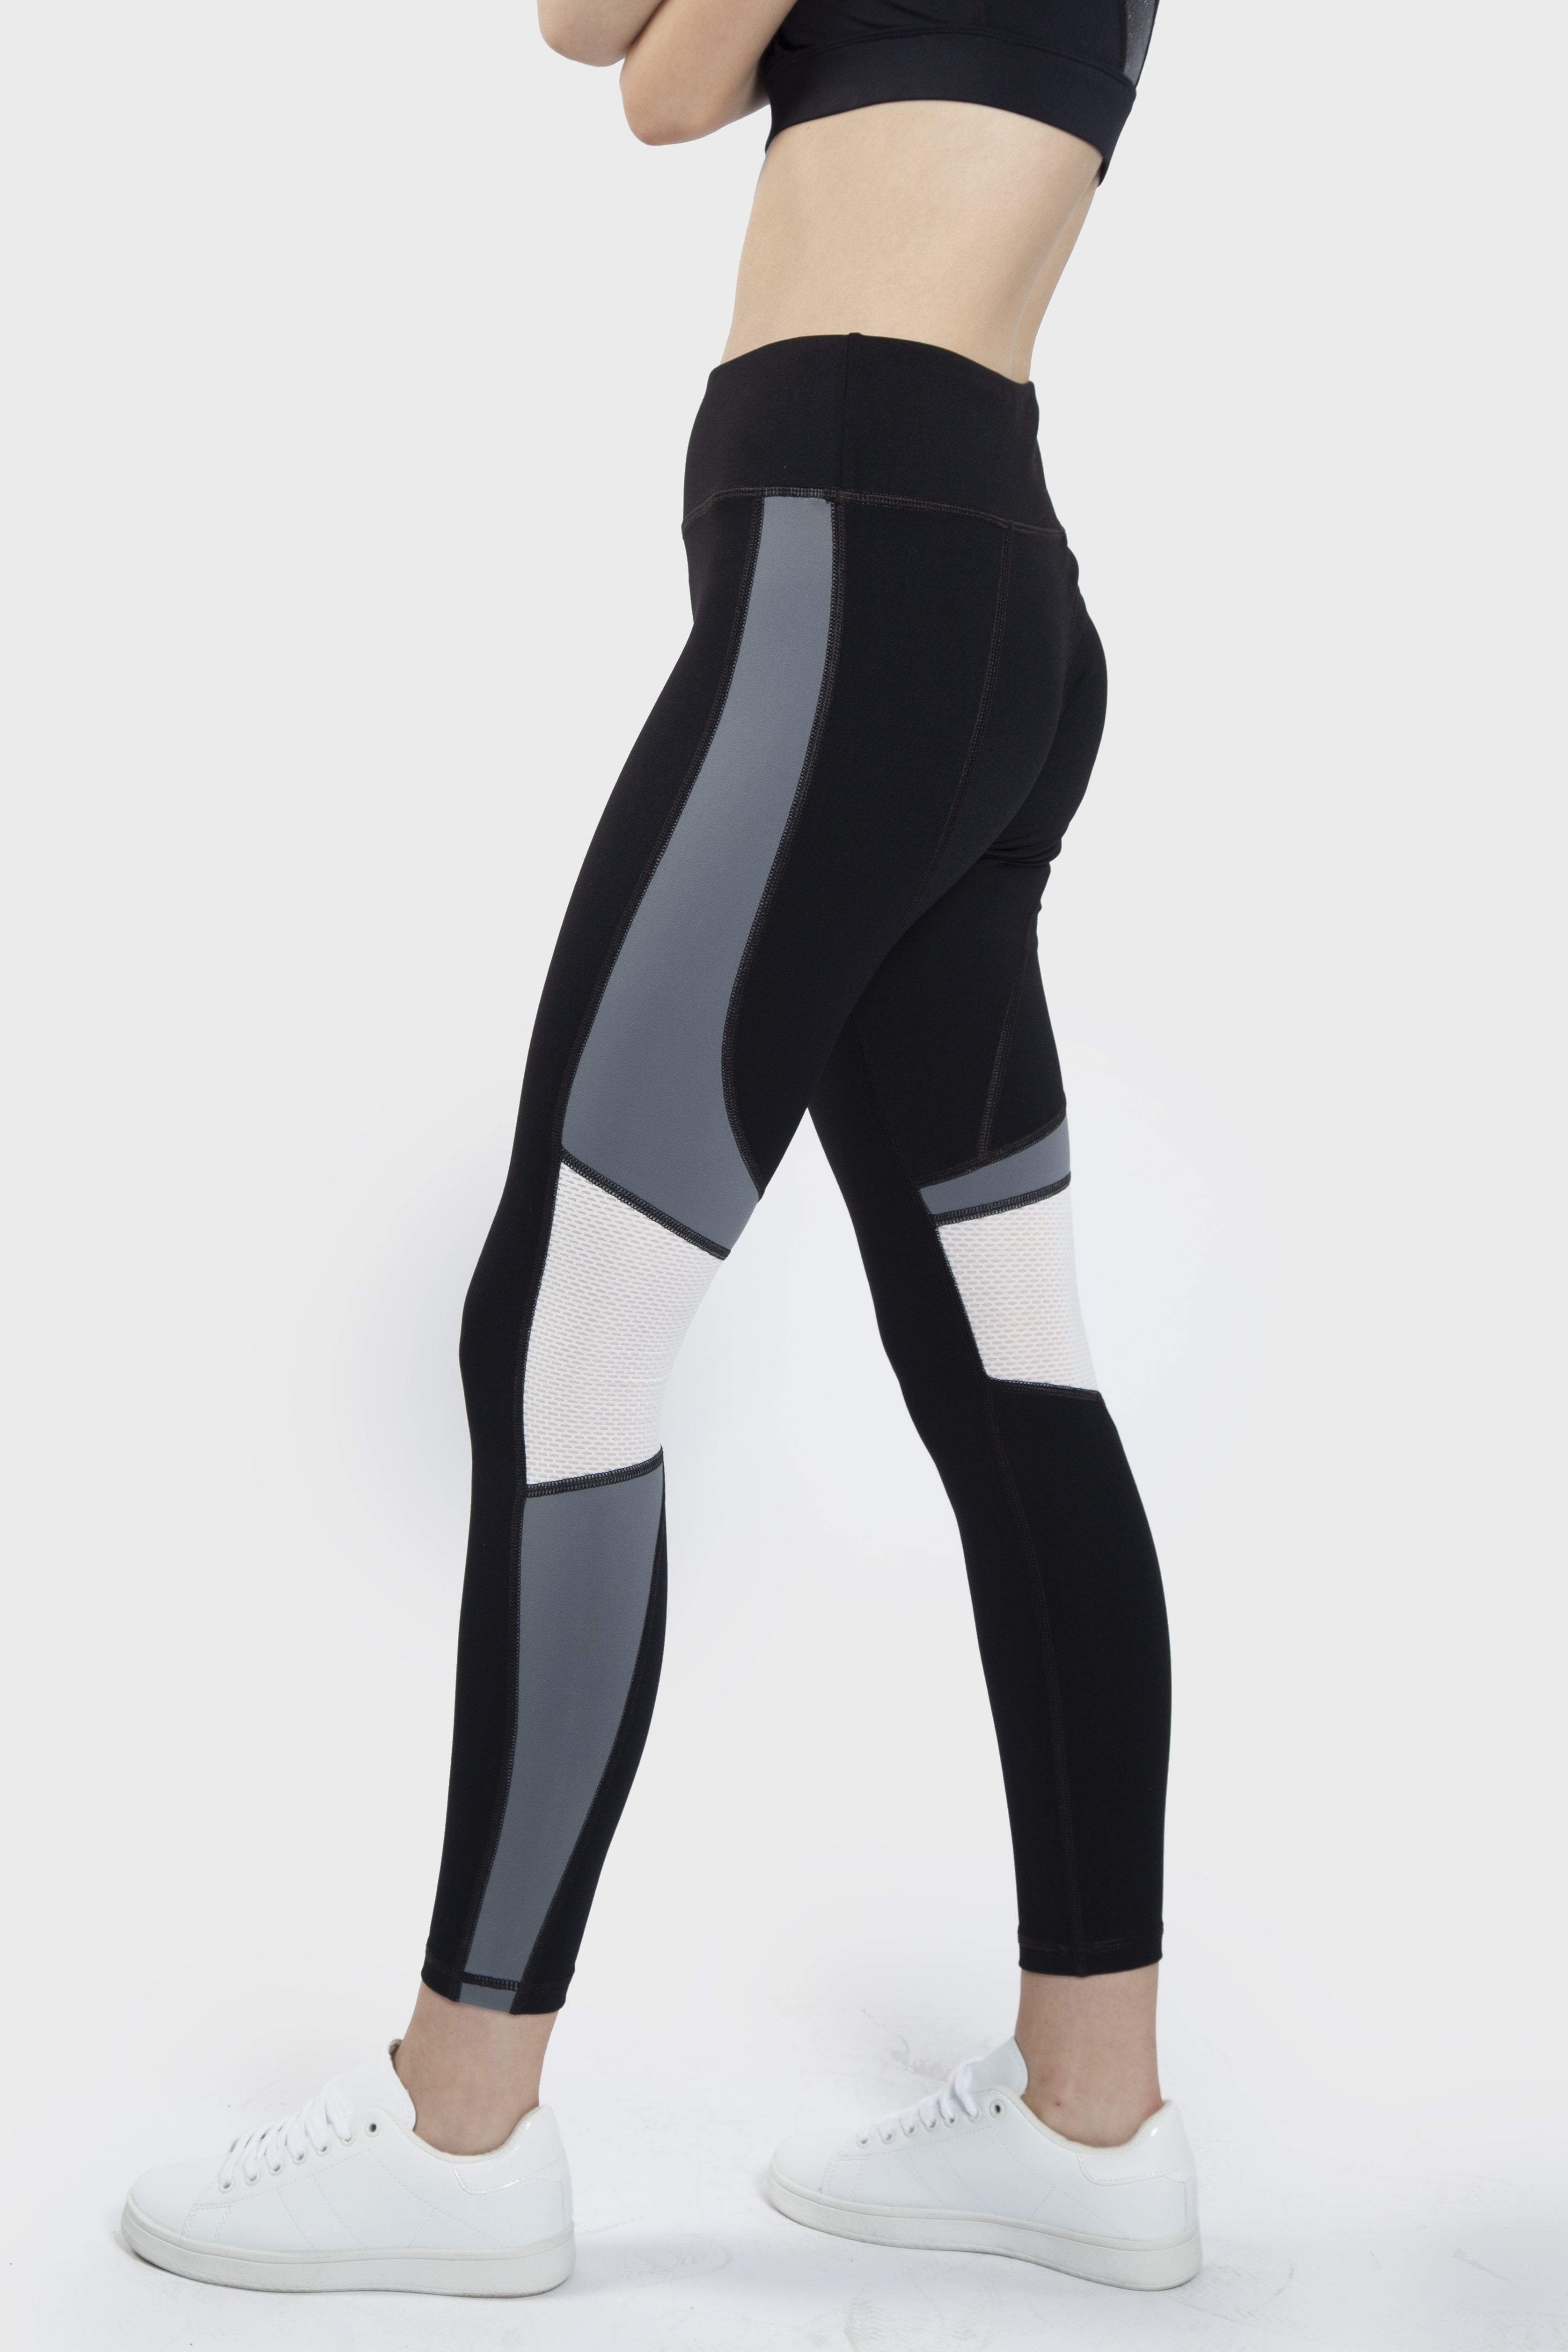 Grey Colour Block Sports Leggings, Active